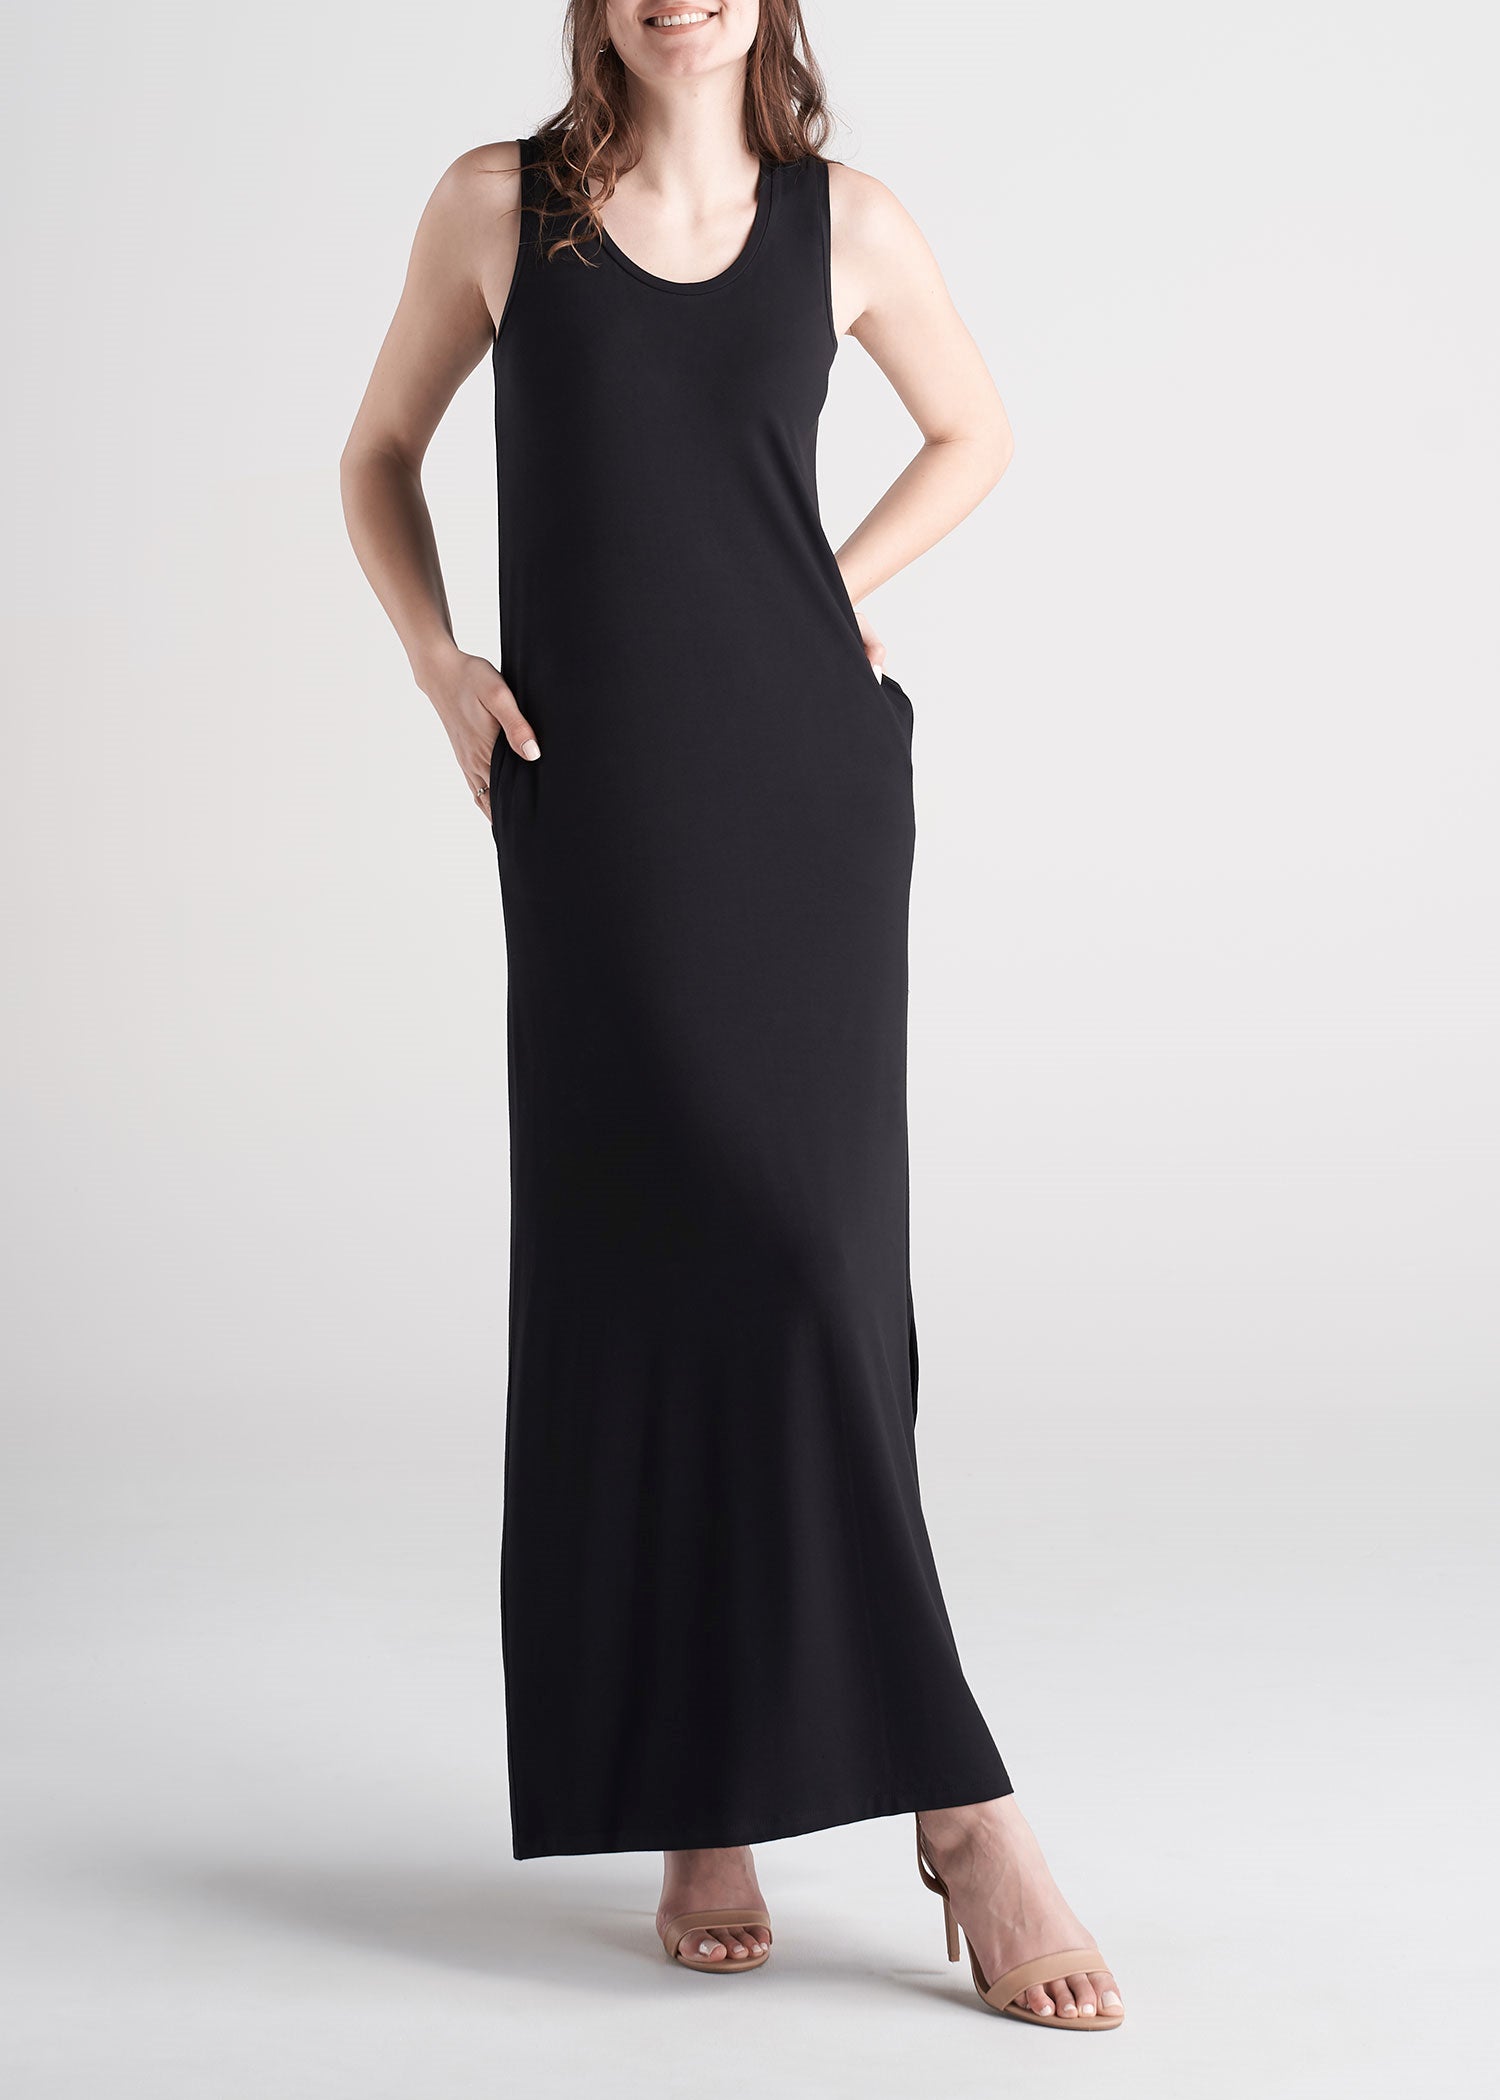 Women's Tall Jersey Maxi Dress in Black ...